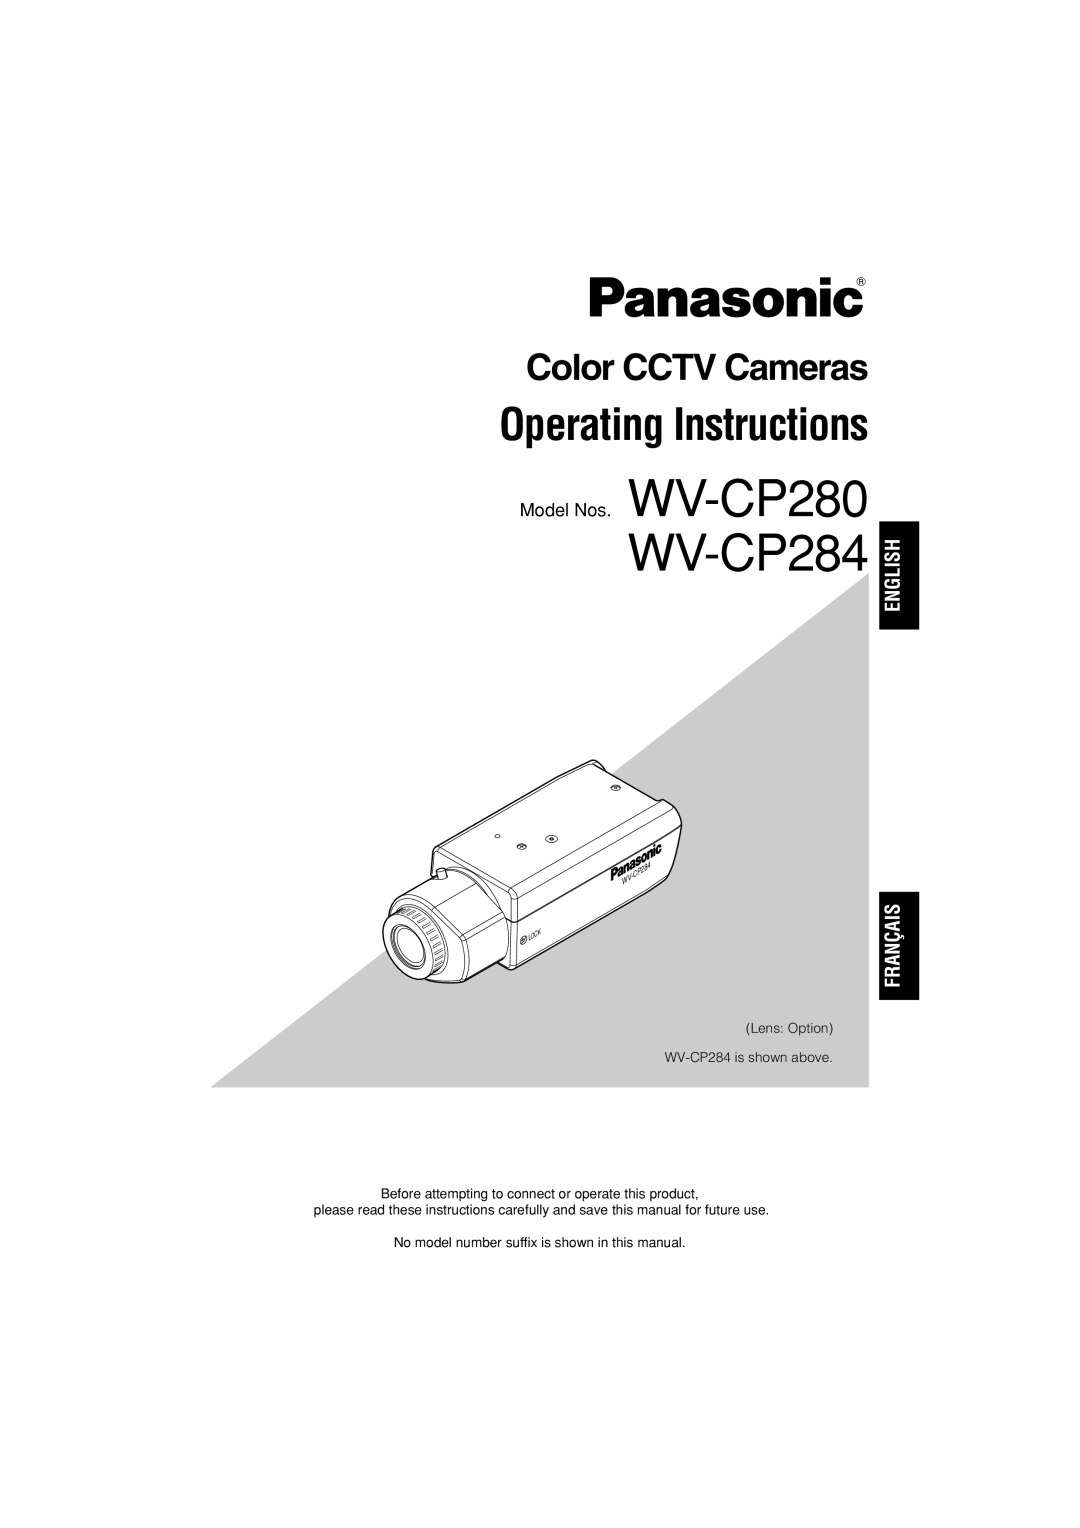 Panasonic operating instructions English, Français, Model Nos. WV-CP280, WV-CP284, Operating Instructions, Lock 